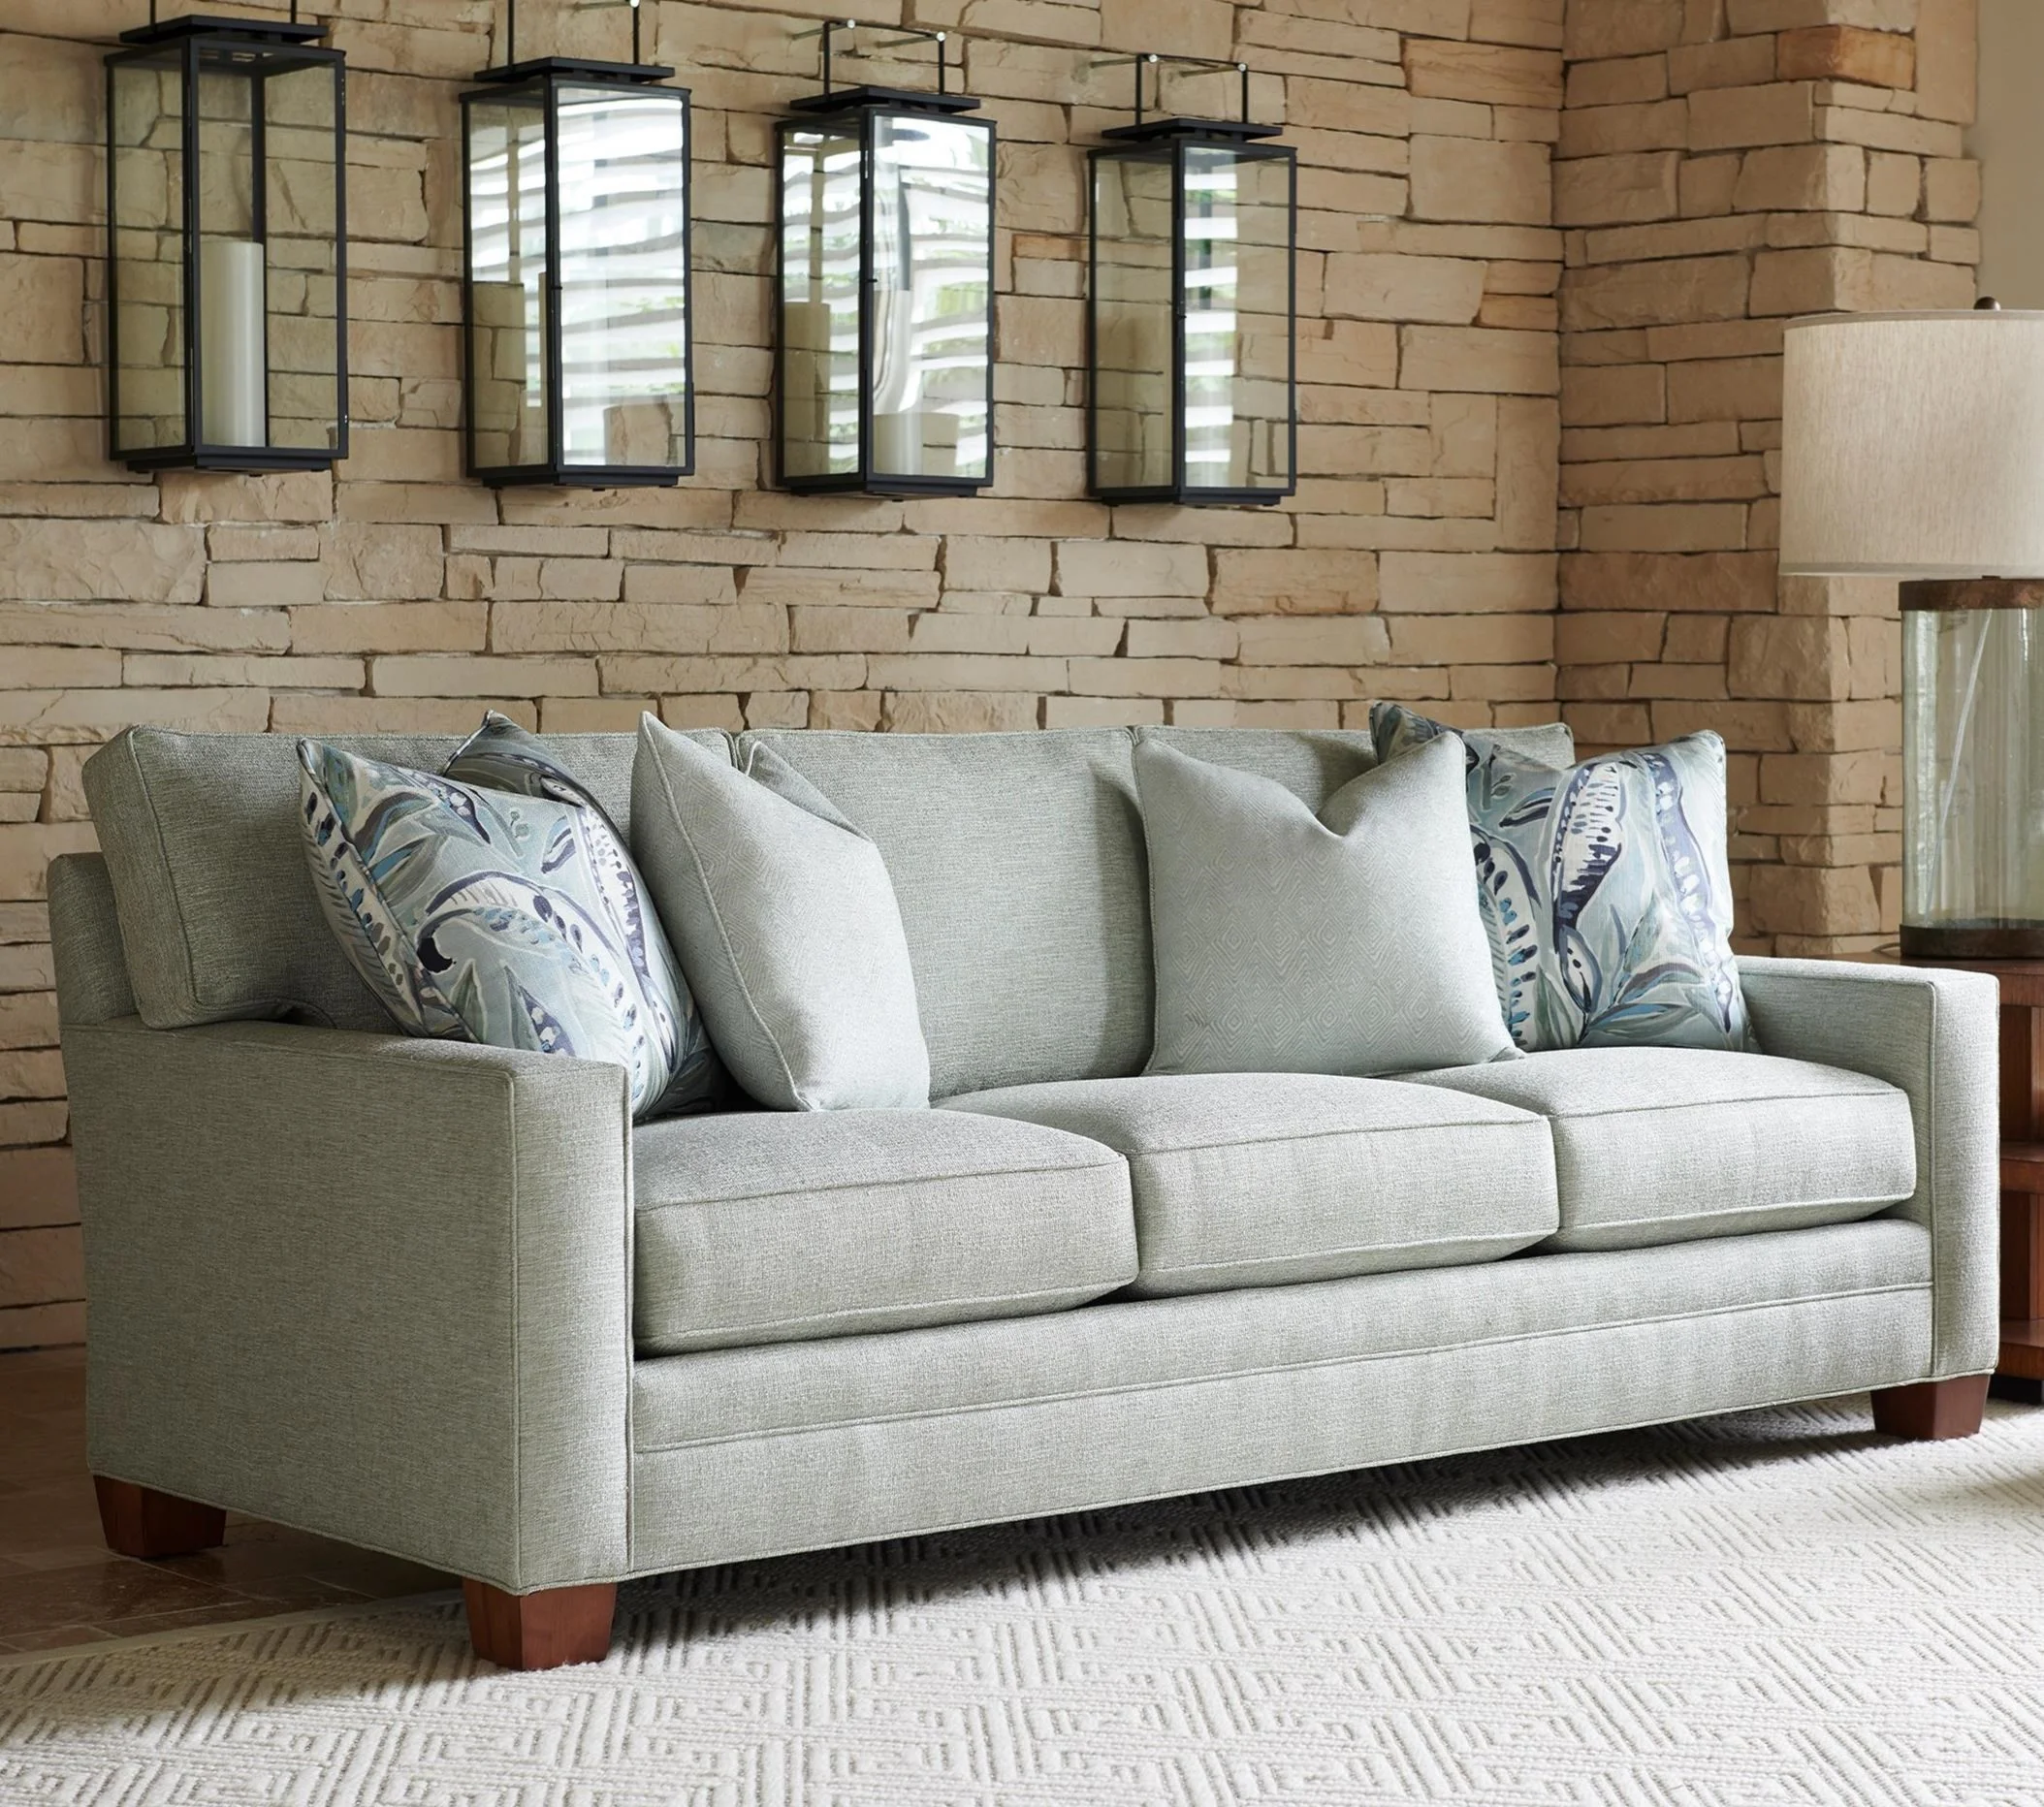 BEN\&s;SHOME BensHome Durable Cushion Support Insert 197x67], New Sofa